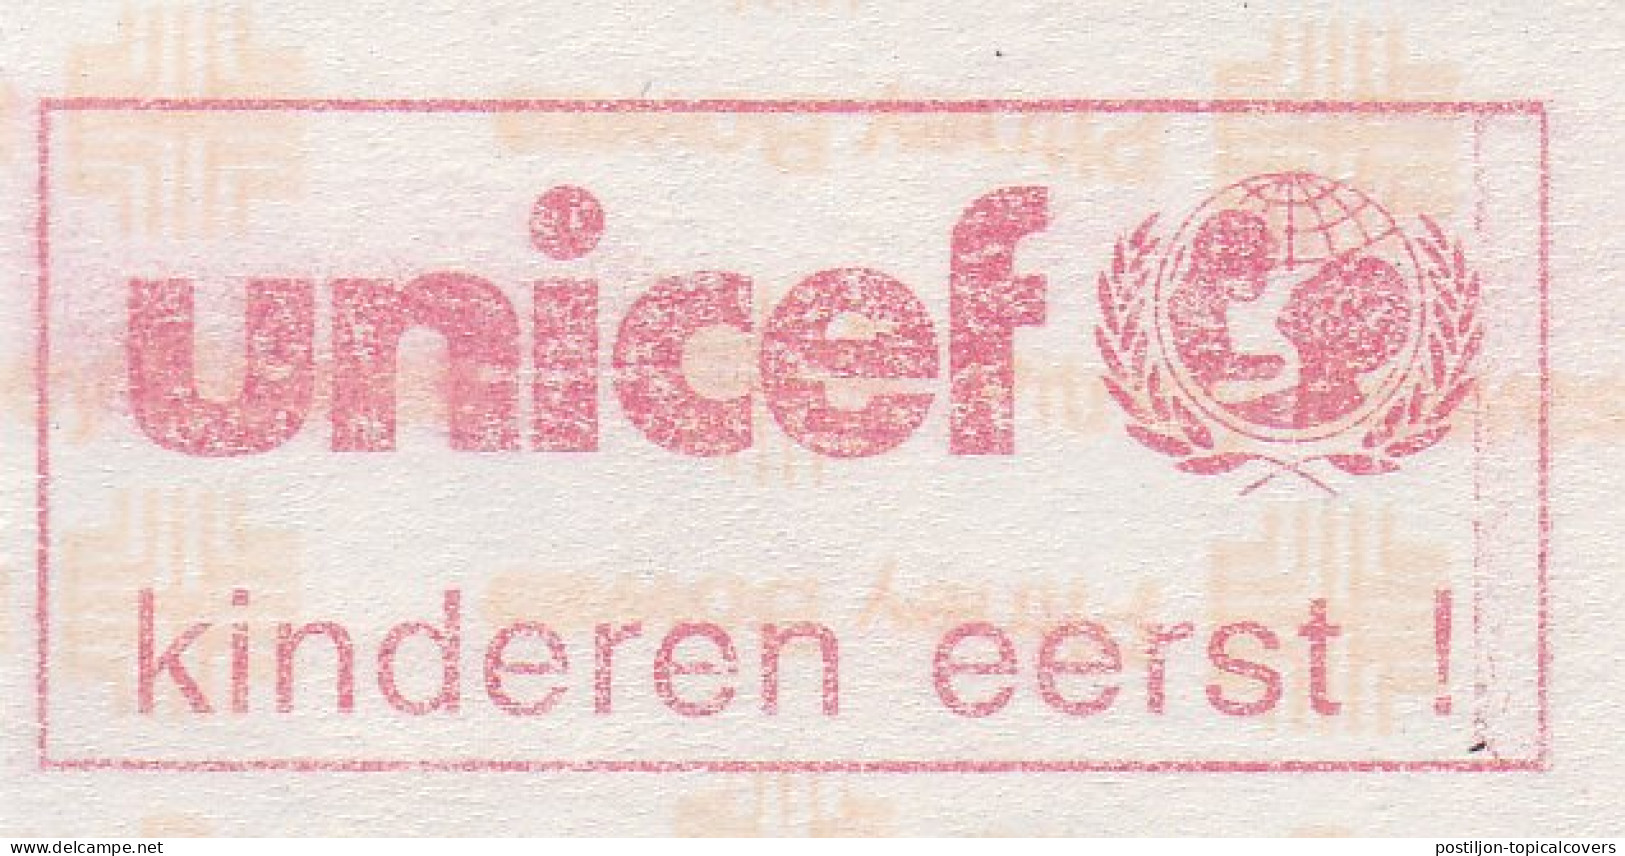 Meter Cut Netherlands 2000 UNICEF - ONU